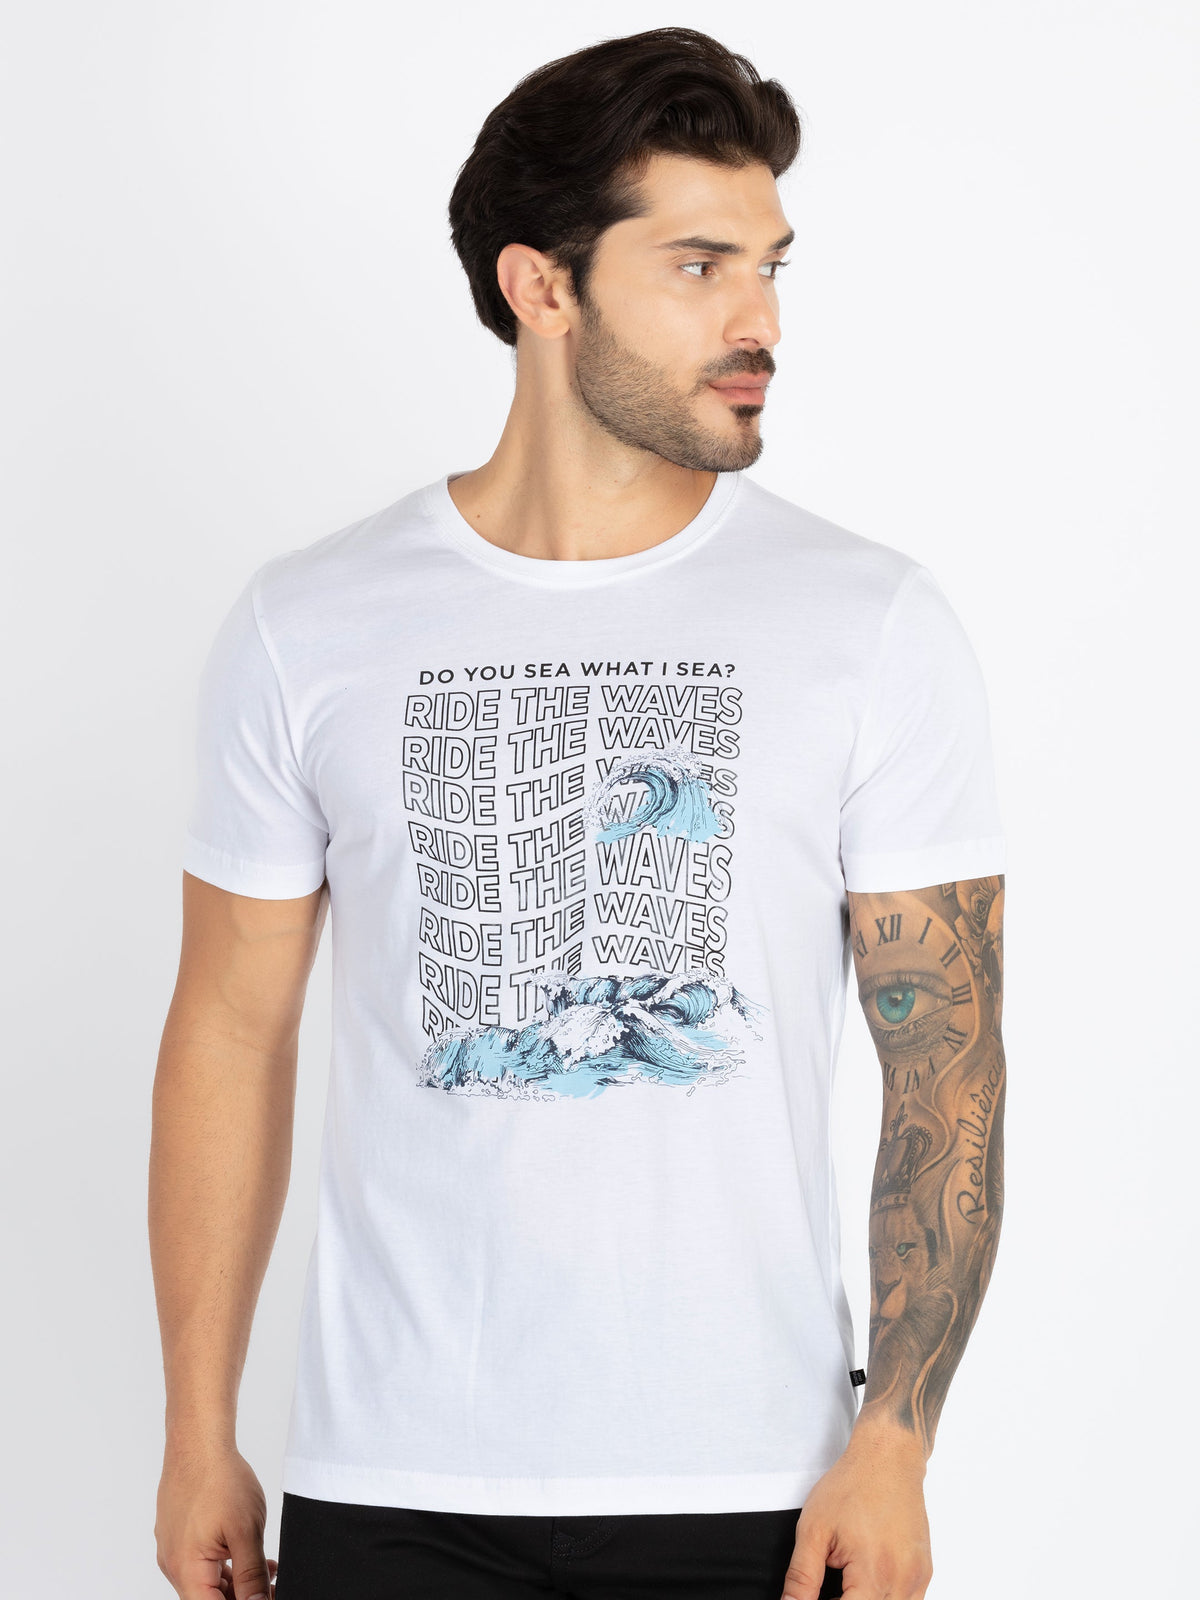 Status Quo |Men's Printed T-shirt - 3XL, 4XL, 5XL